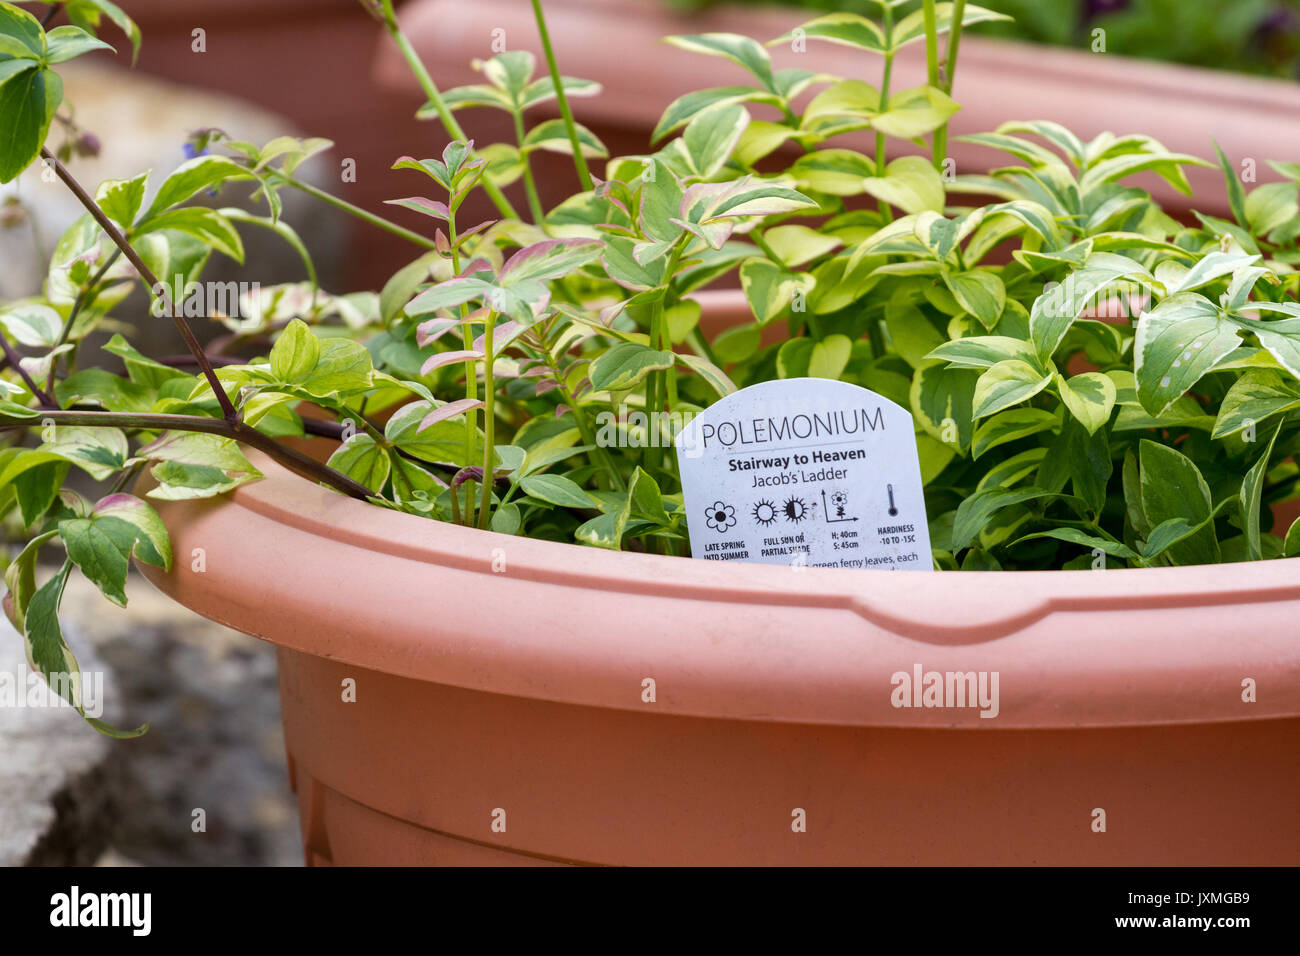 Polemonium plant in a pot Stock Photo